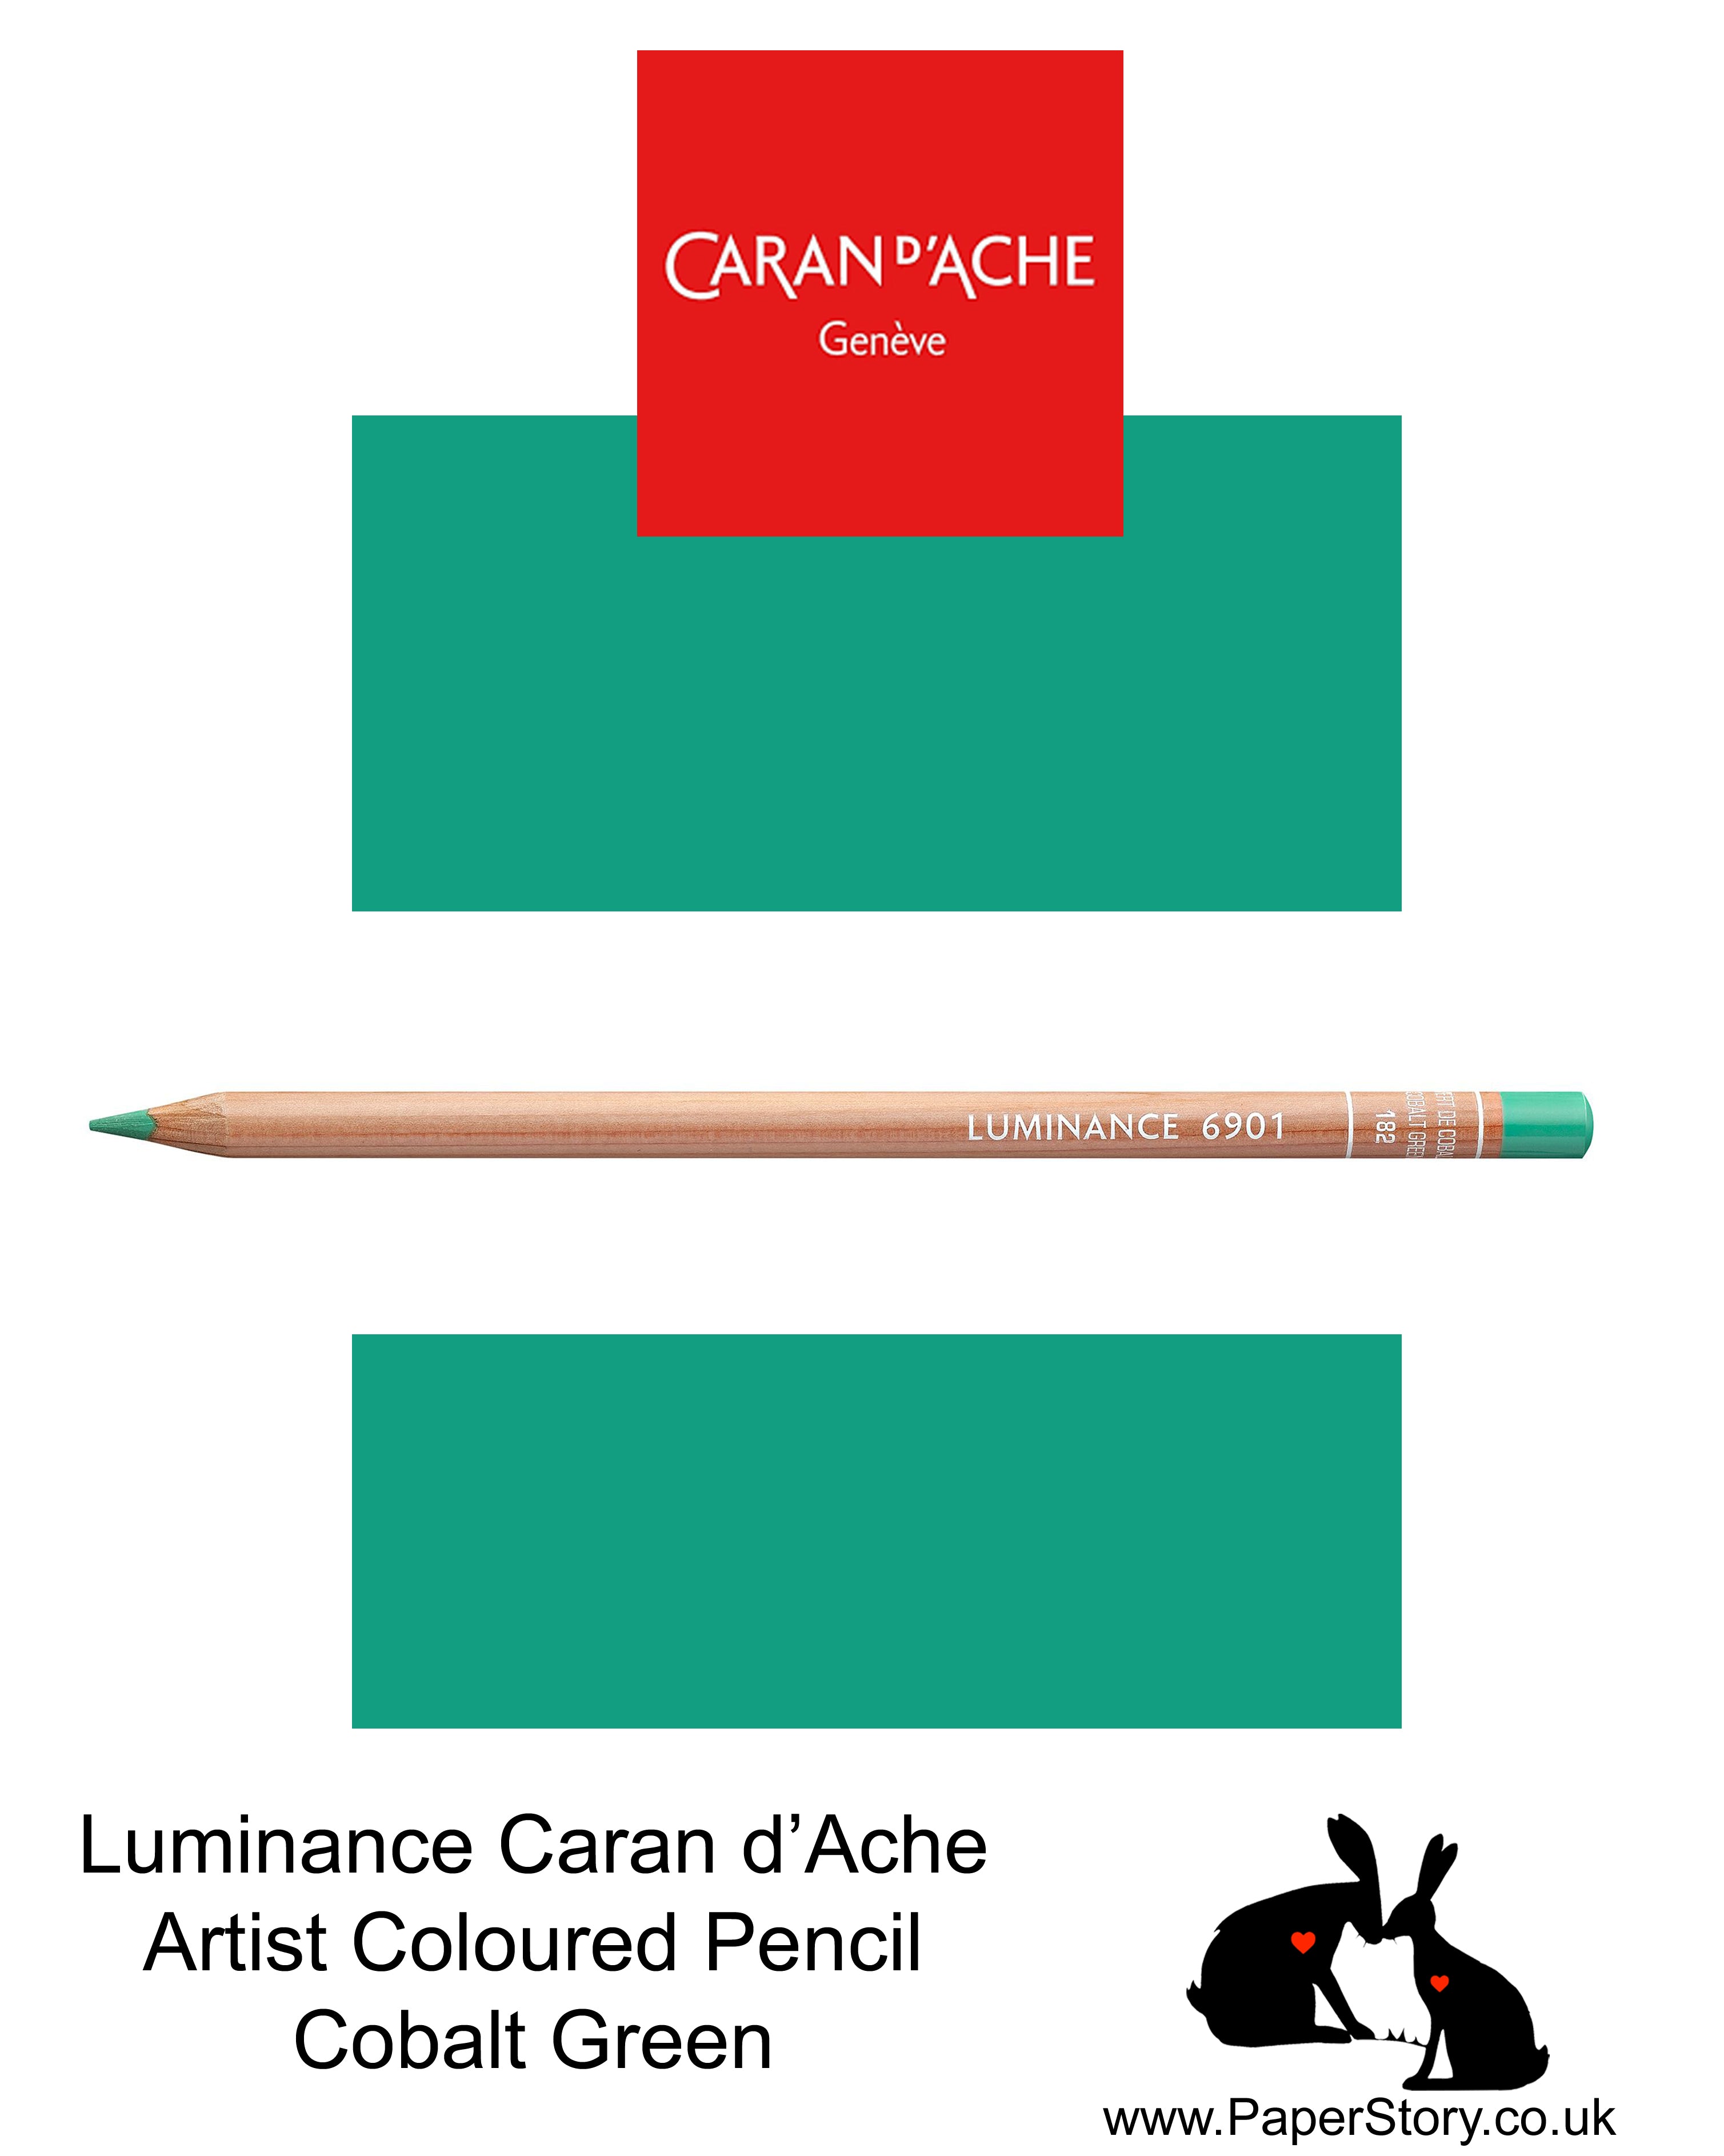 Caran d'Ache Luminance individual Artist Colour Pencils 6901 Cobalt Green 182